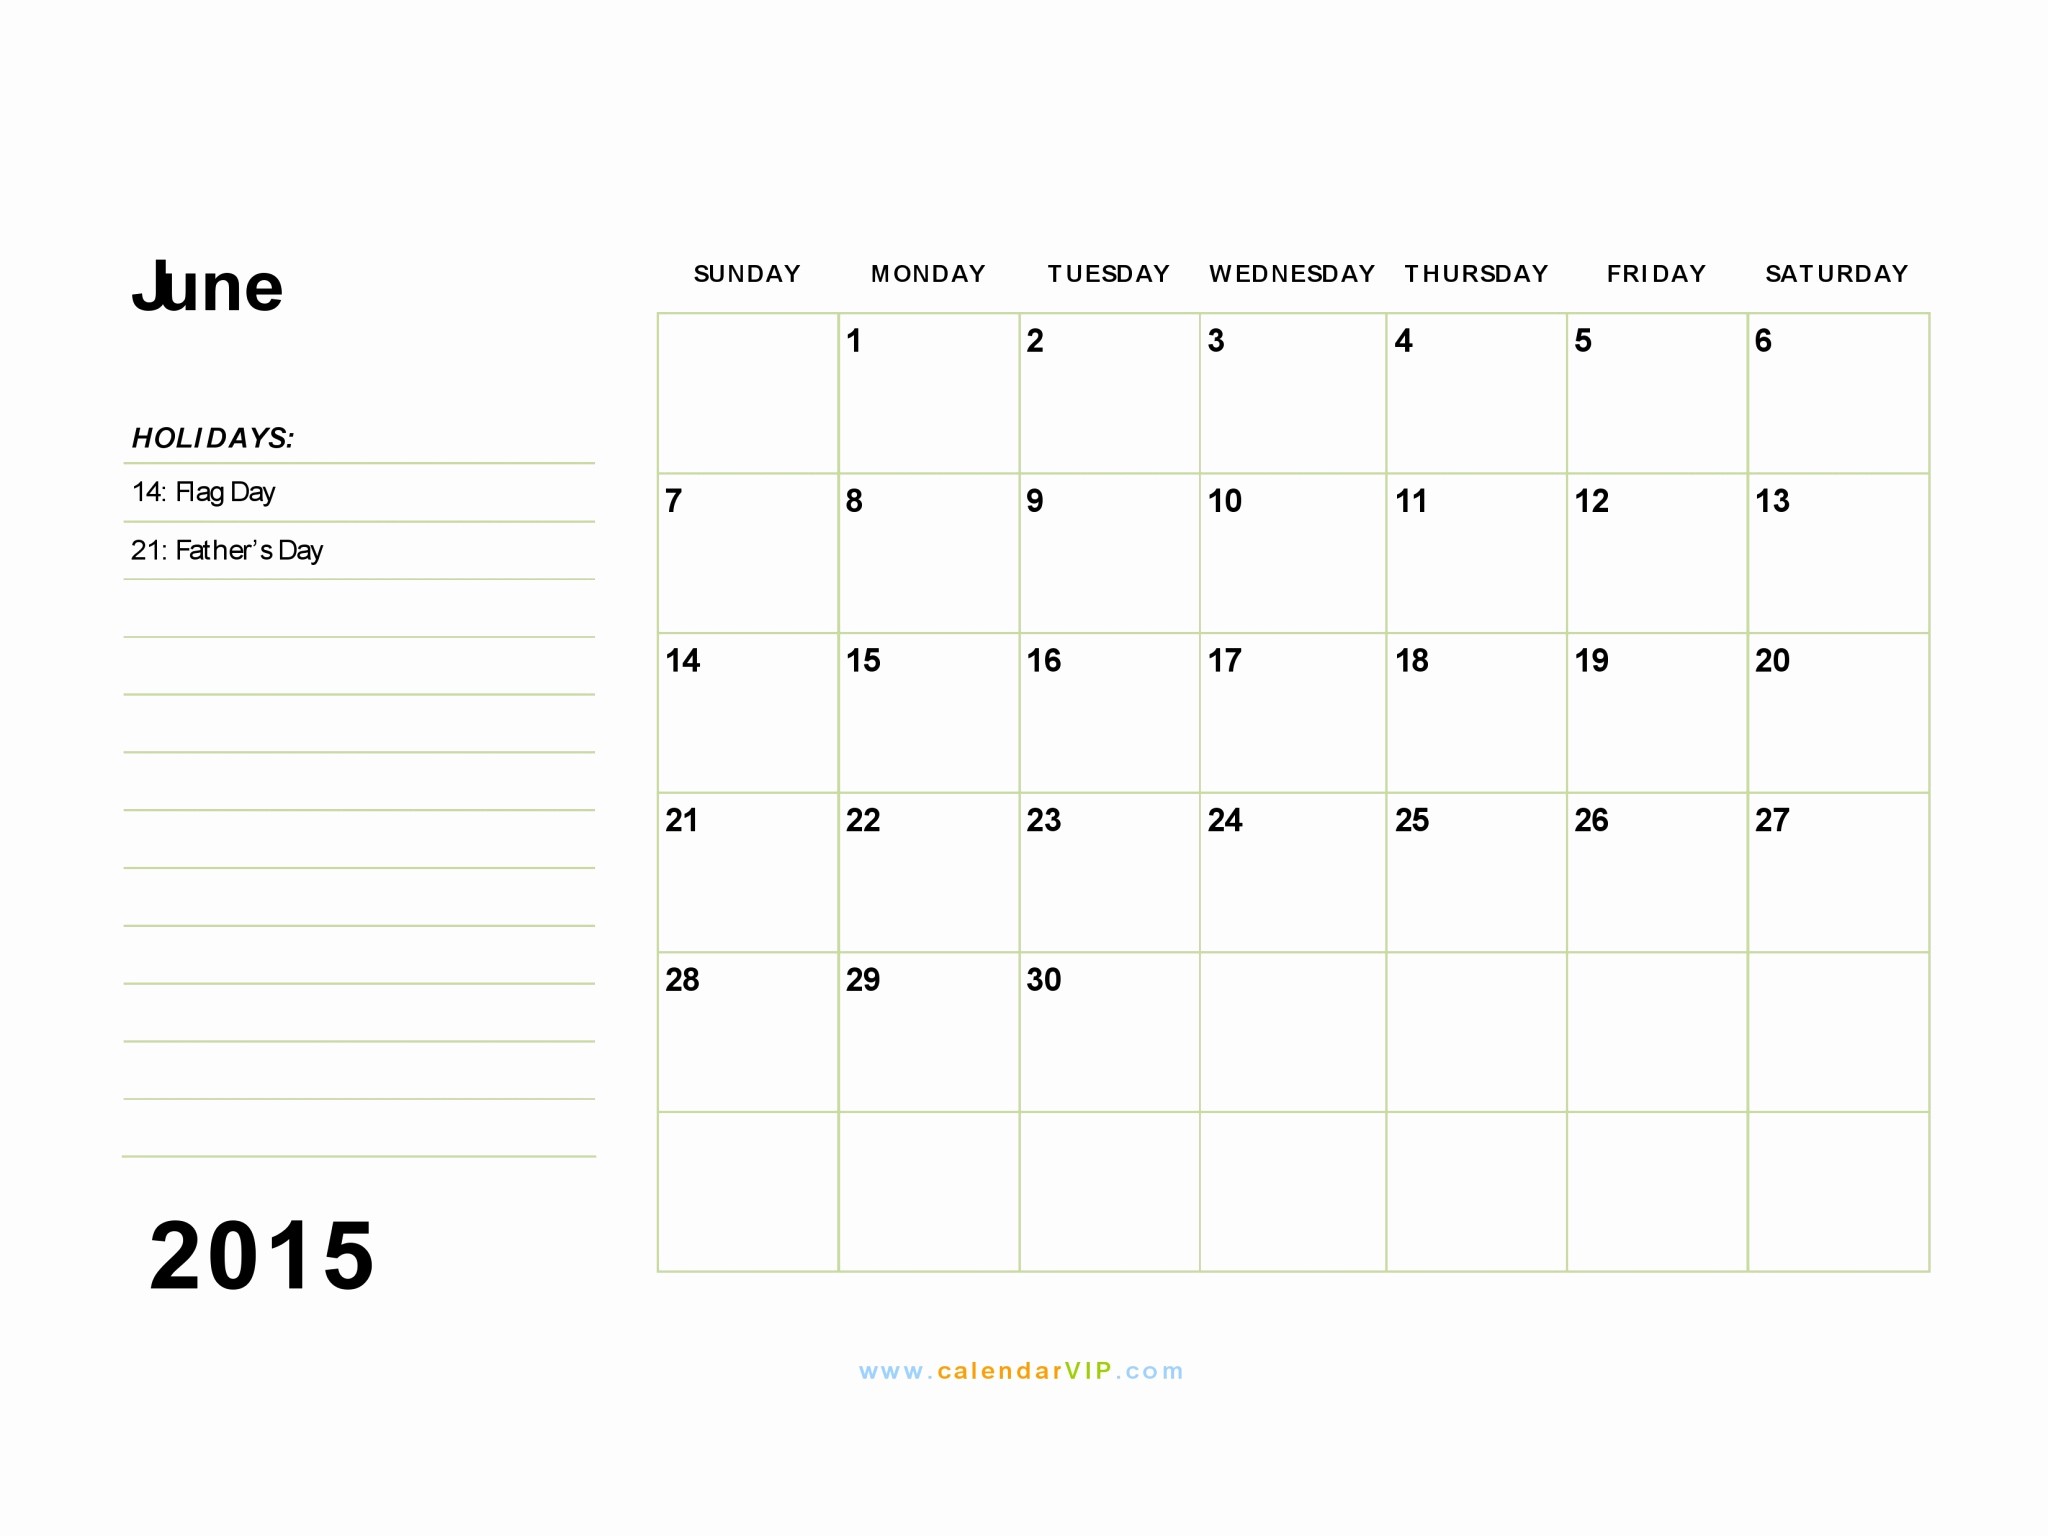 Calendar Template for June 2015 Elegant June 2015 Calendar Blank Printable Calendar Template In